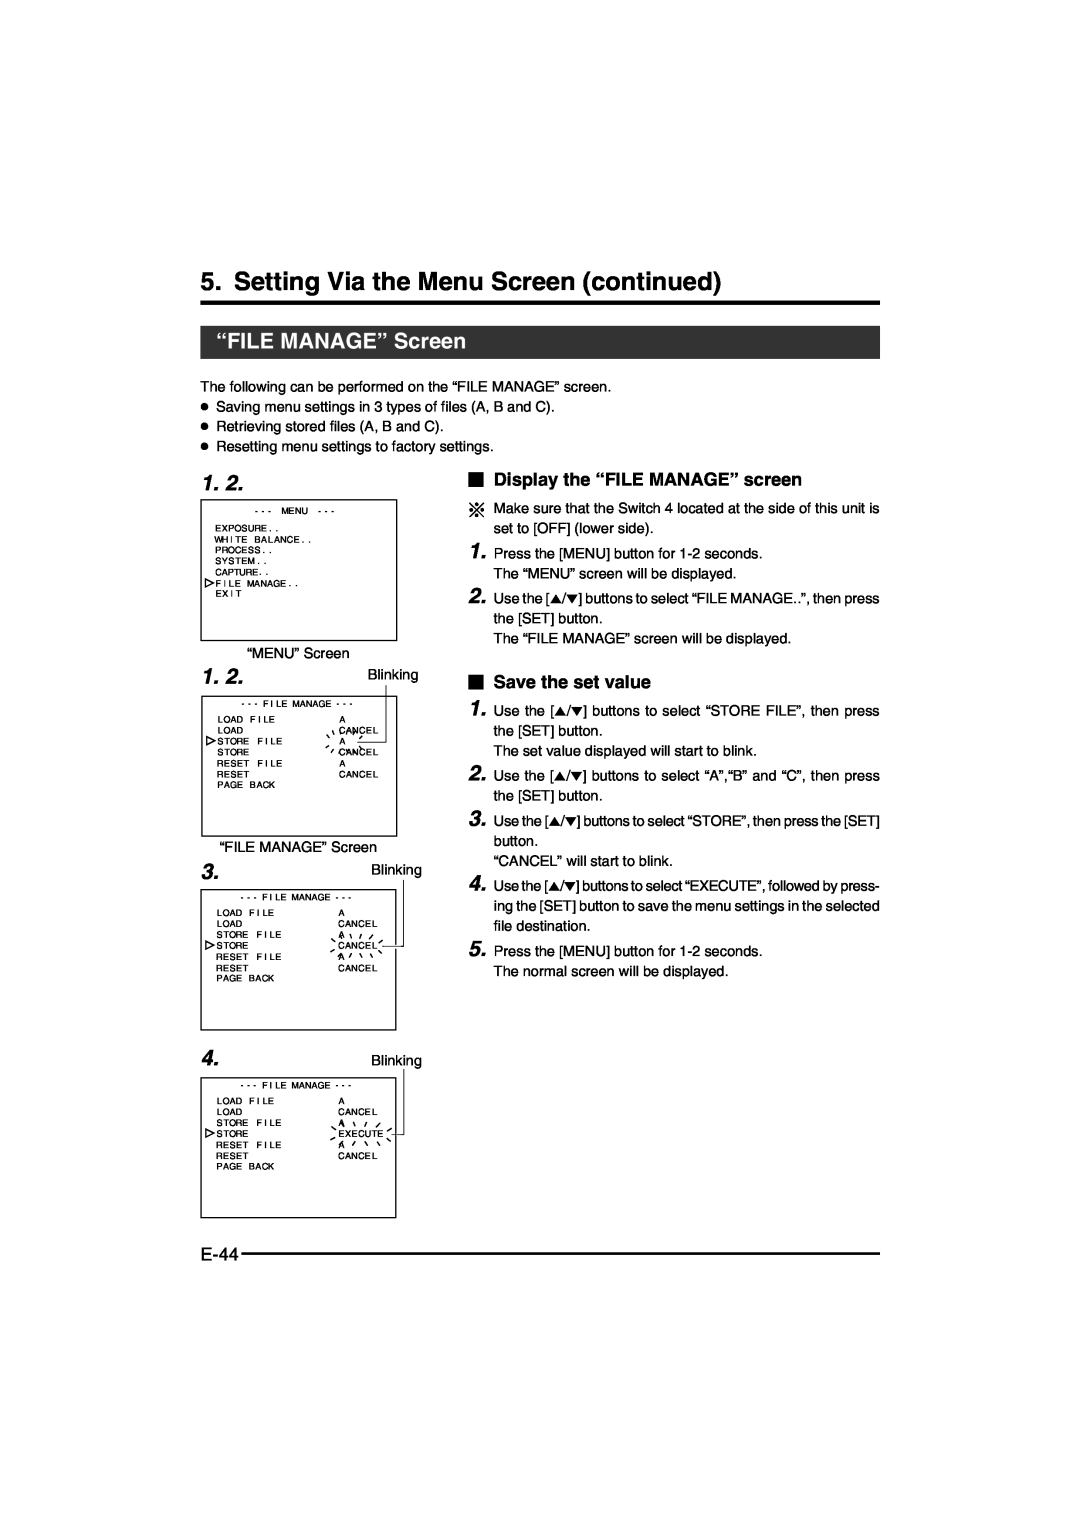 JVC KY-F550E instruction manual “FILE MANAGE” Screen,  Display the “FILE MANAGE” screen,  Save the set value, E-44 